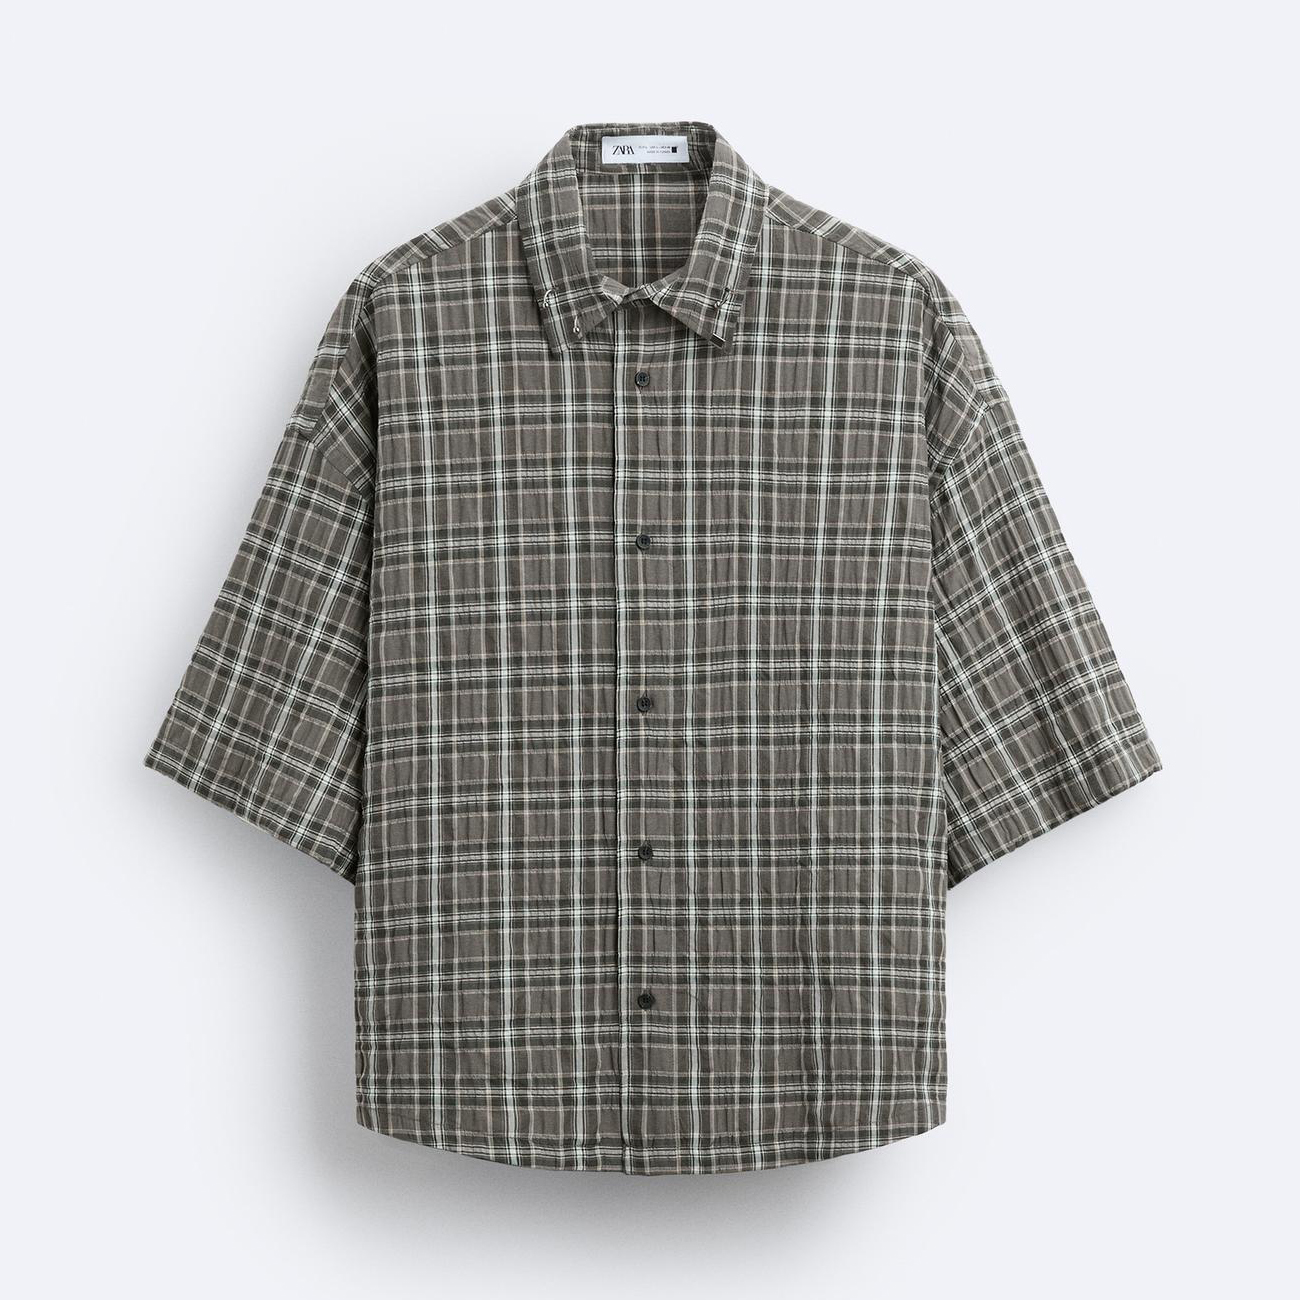 Рубашка Zara Check With Piercing Detail, серый/хаки рубашка zara kids check with detachable hood серый черный